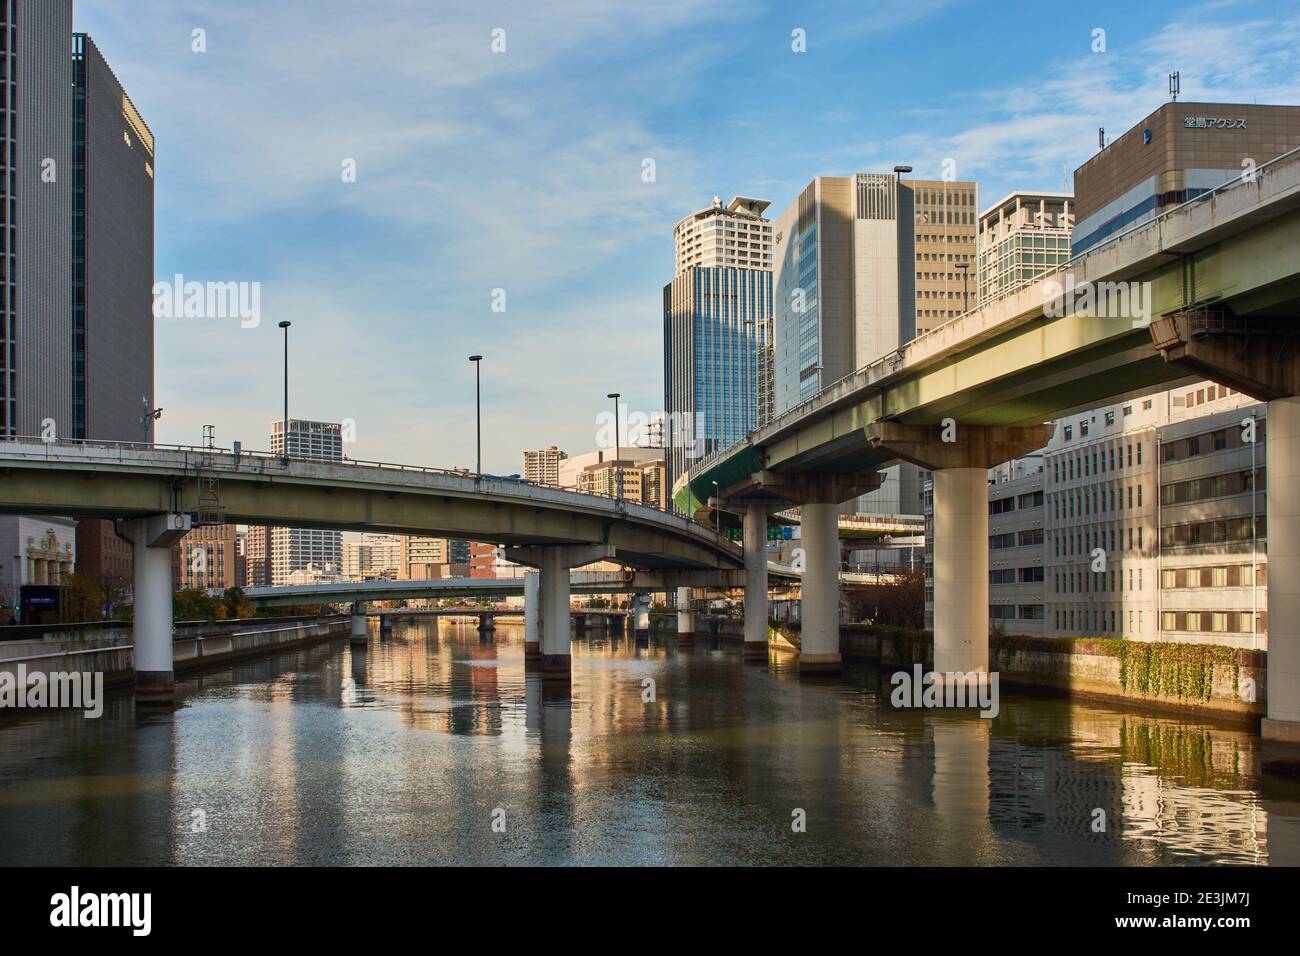 Osaka, Japan - November 25, 2017: Osaka downtown business area and bridges across Okawa river in Osaka, Japan Stock Photo